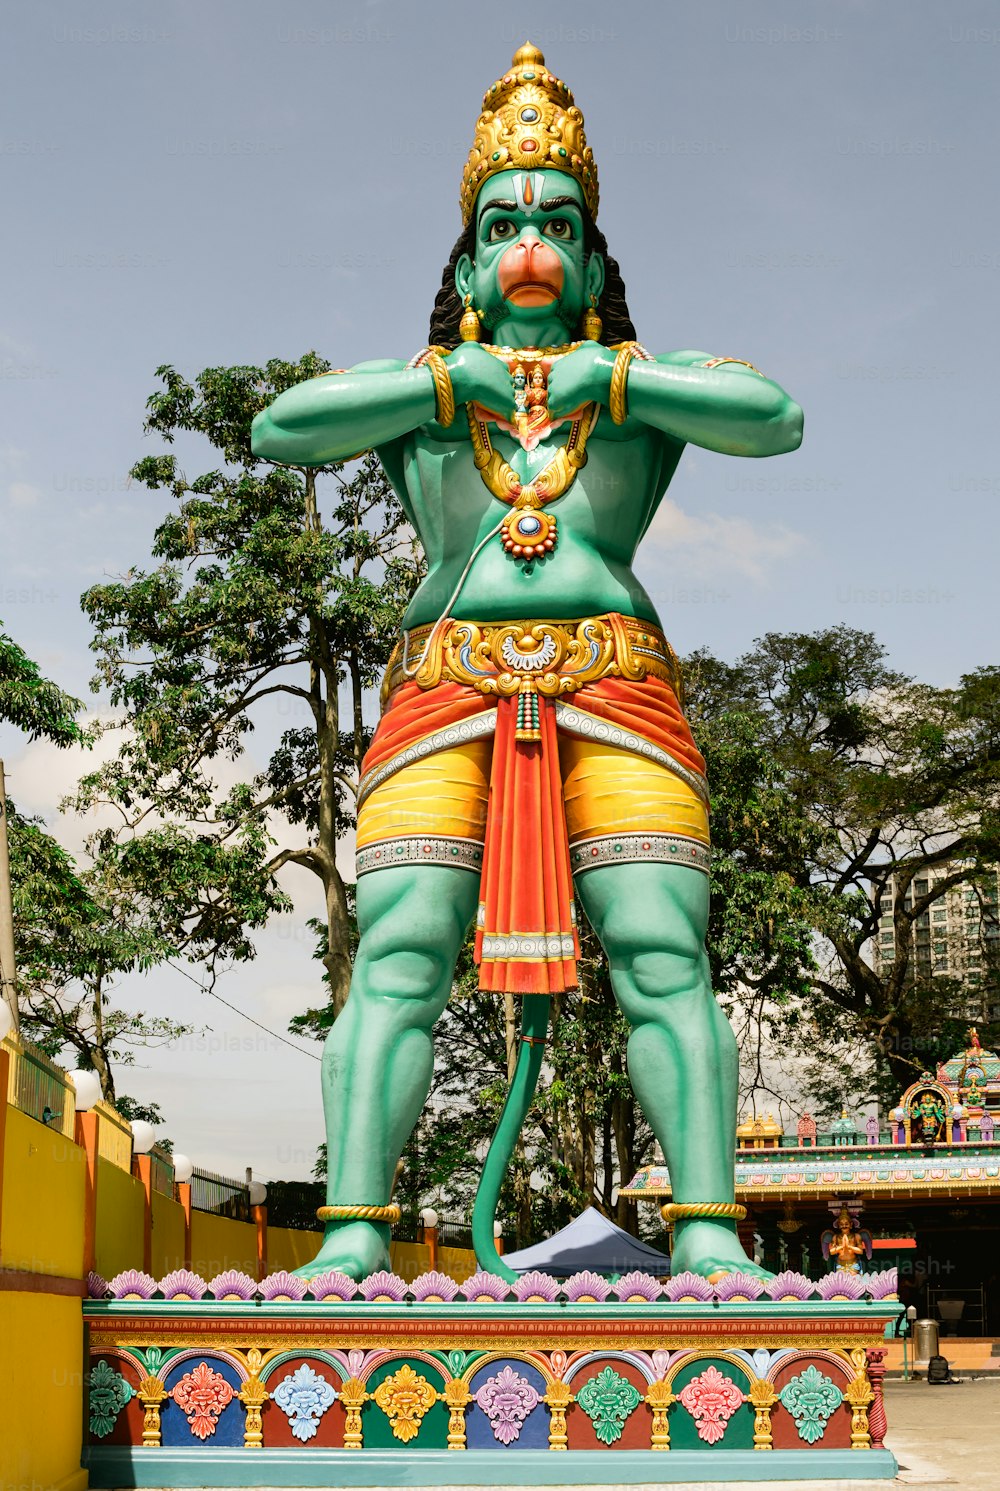 une grande statue d’un homme en tenue verte